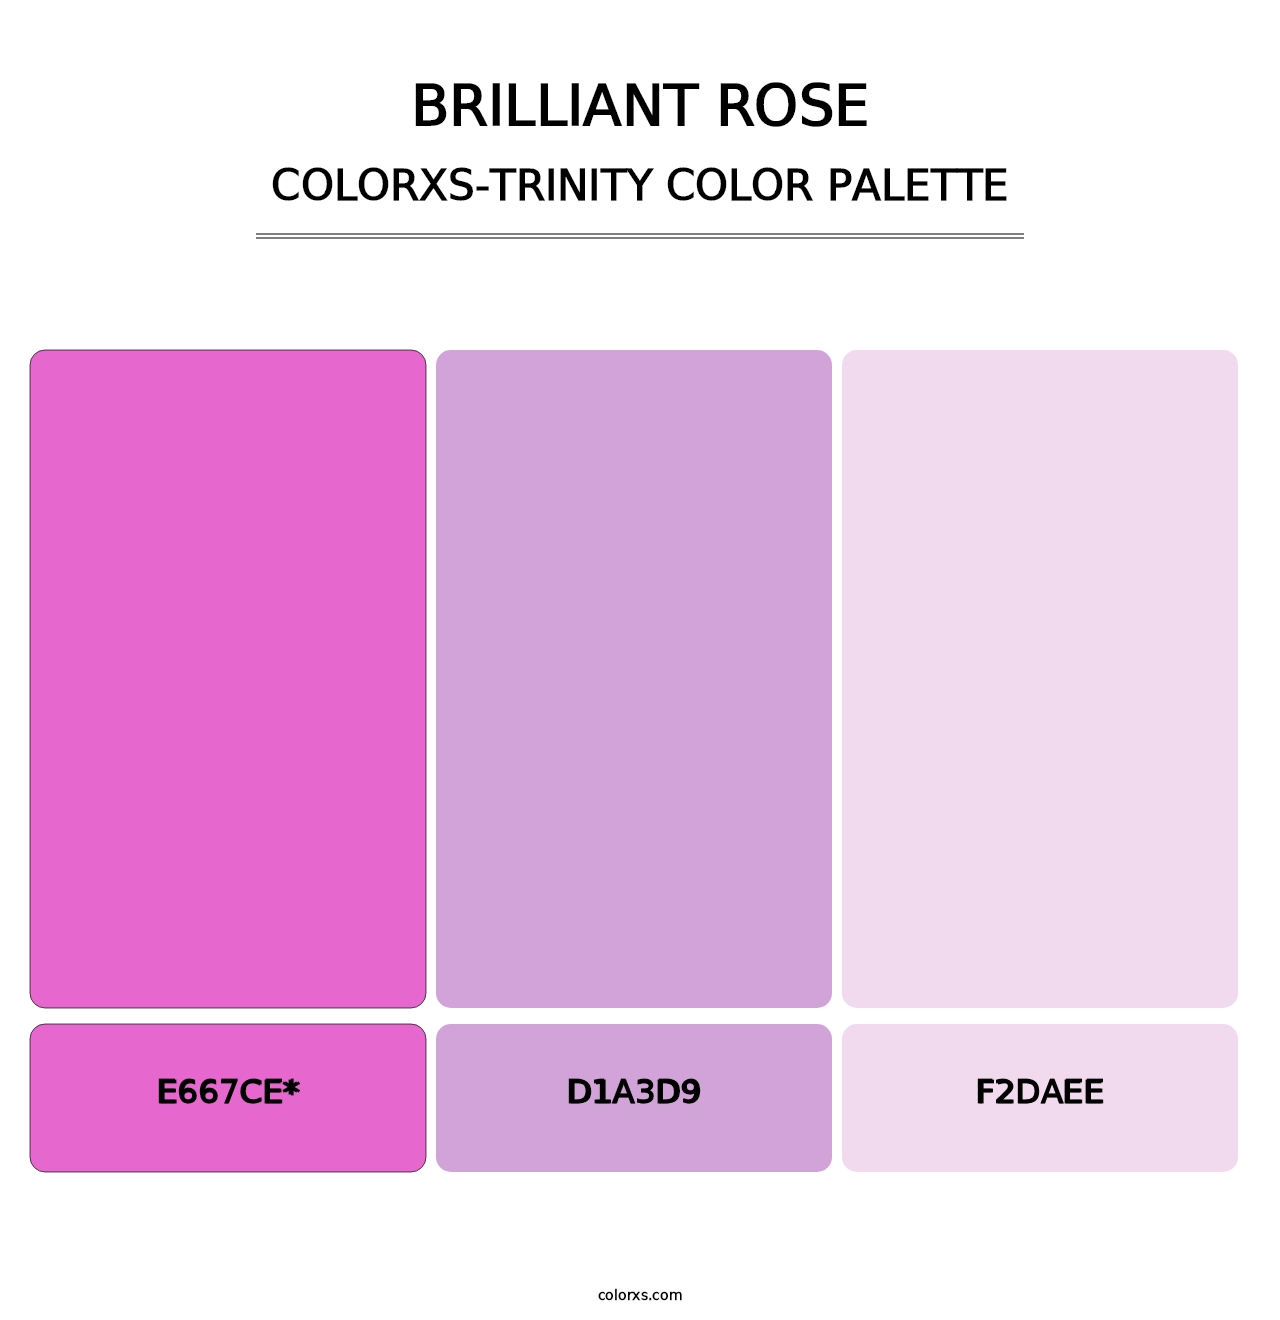 Brilliant Rose - Colorxs Trinity Palette